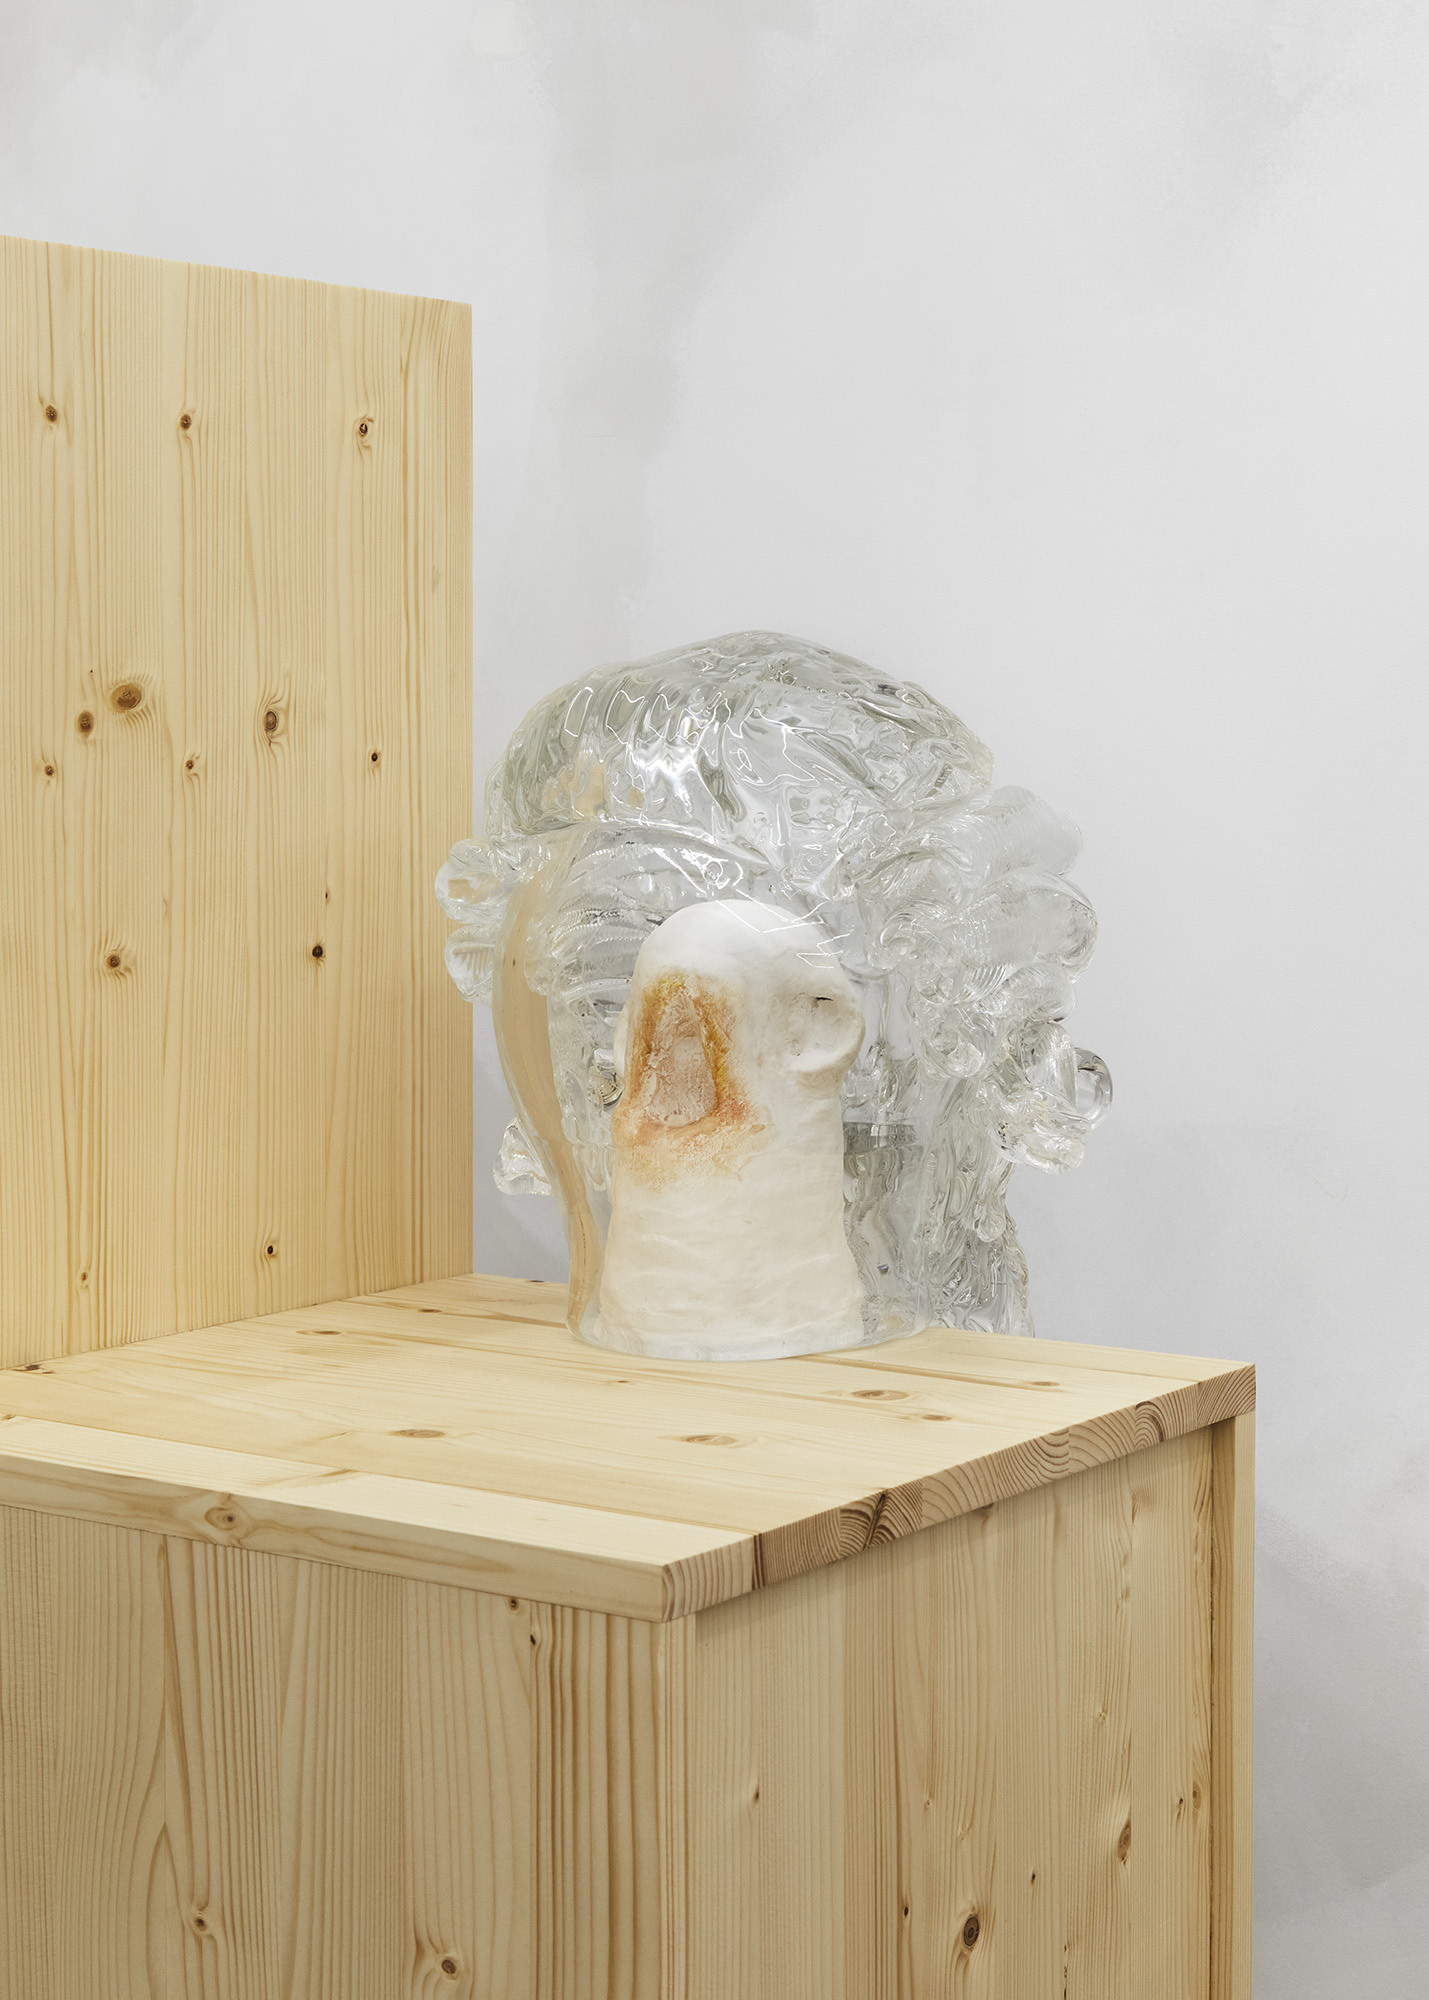 Jonald Dudd nÂ°2 â€˜Stuhl/Zeugeâ€™, 2015-2023 Wood, Murano blown glass, plaster 135 x 49 x 40 cm